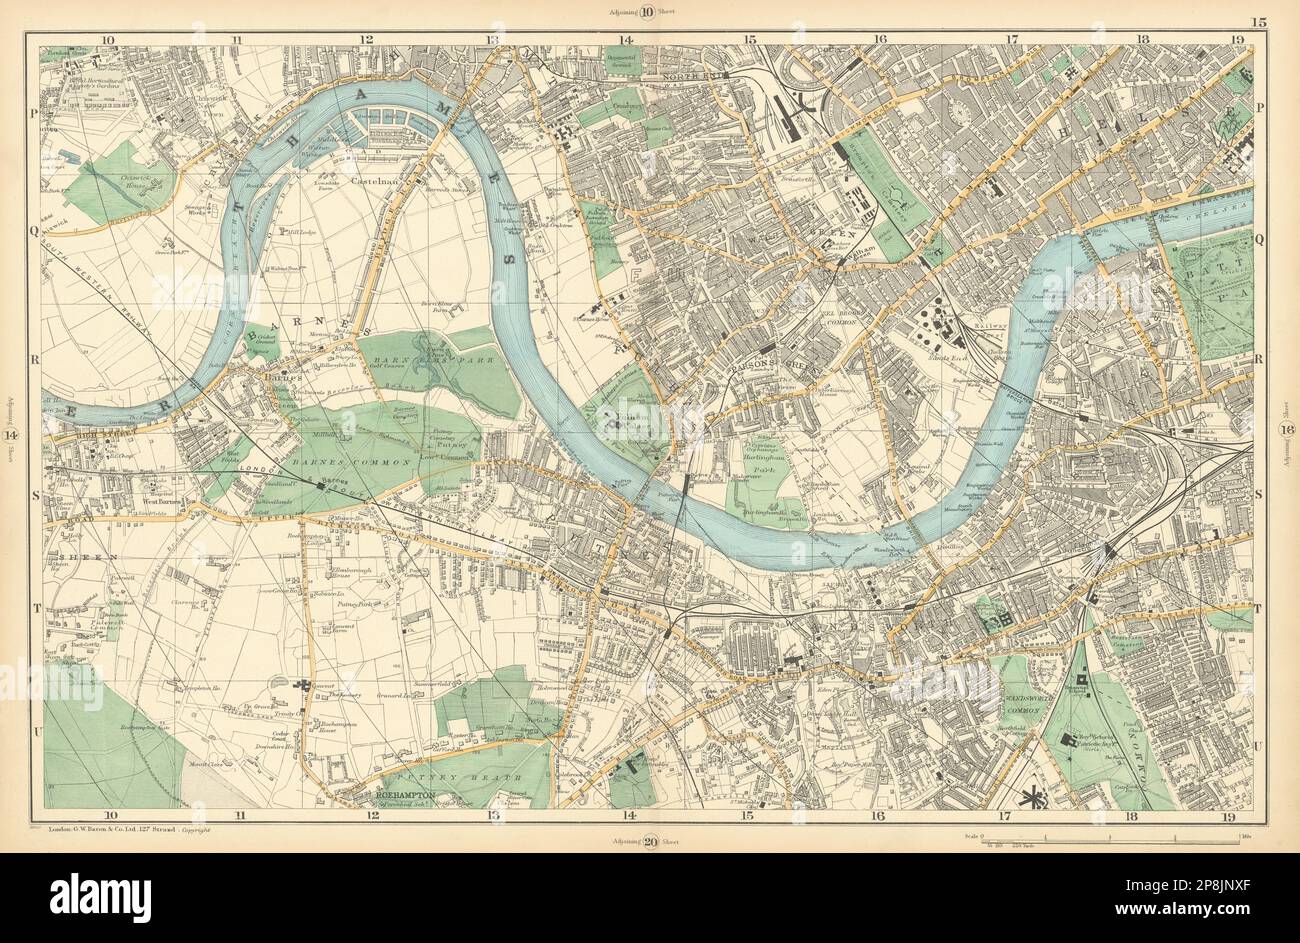 LONDON Chiswick Barnes Fulham Chelsea Putney Wandsworth Clapham. BACON  1900 map Stock Photo